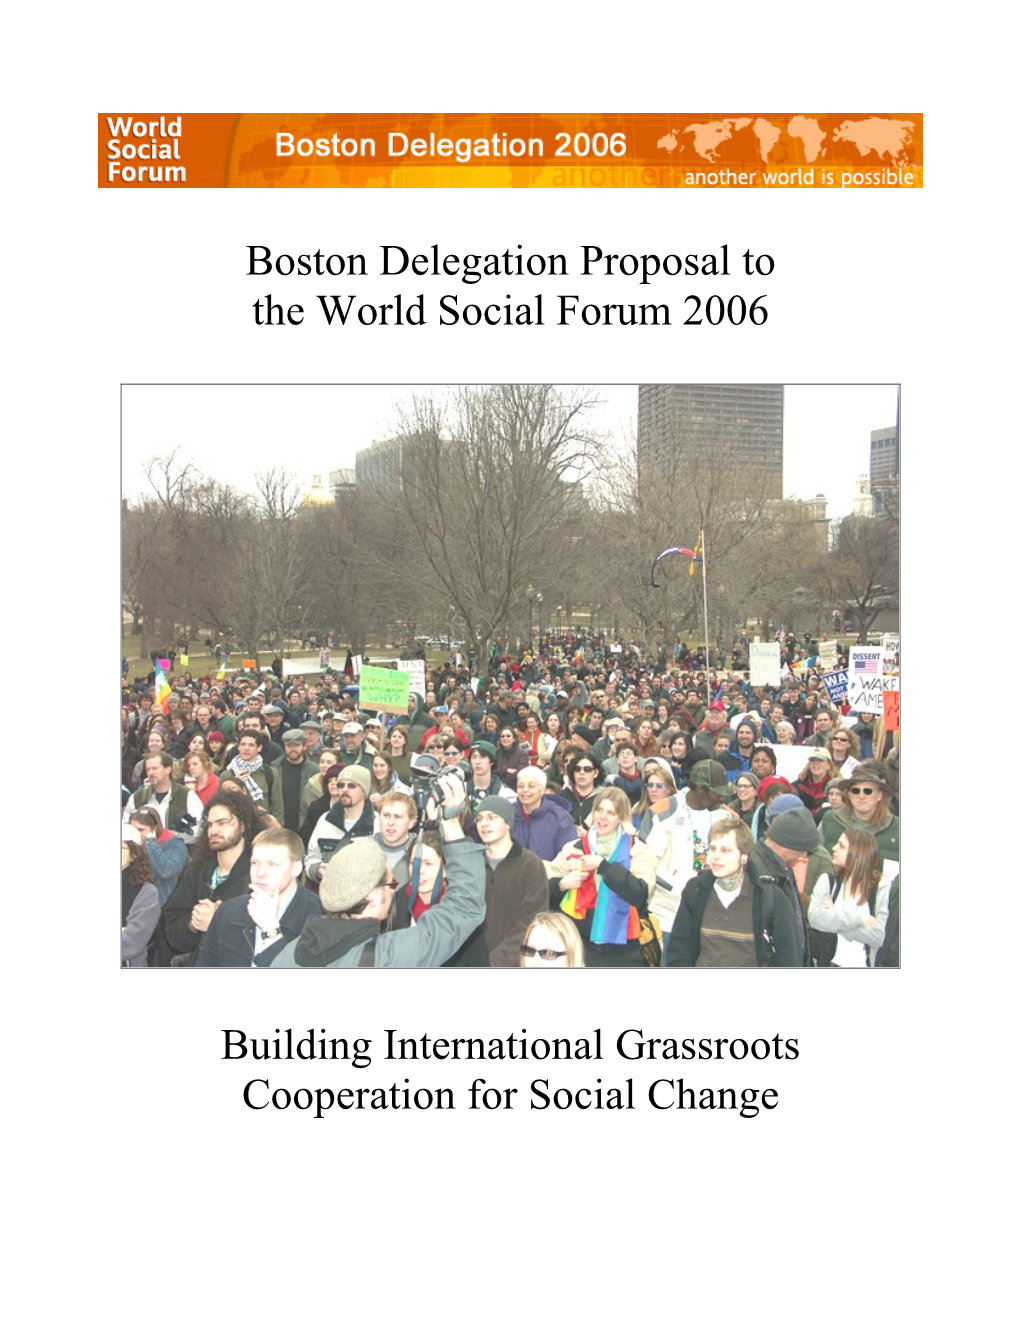 The World Social Forum 2006